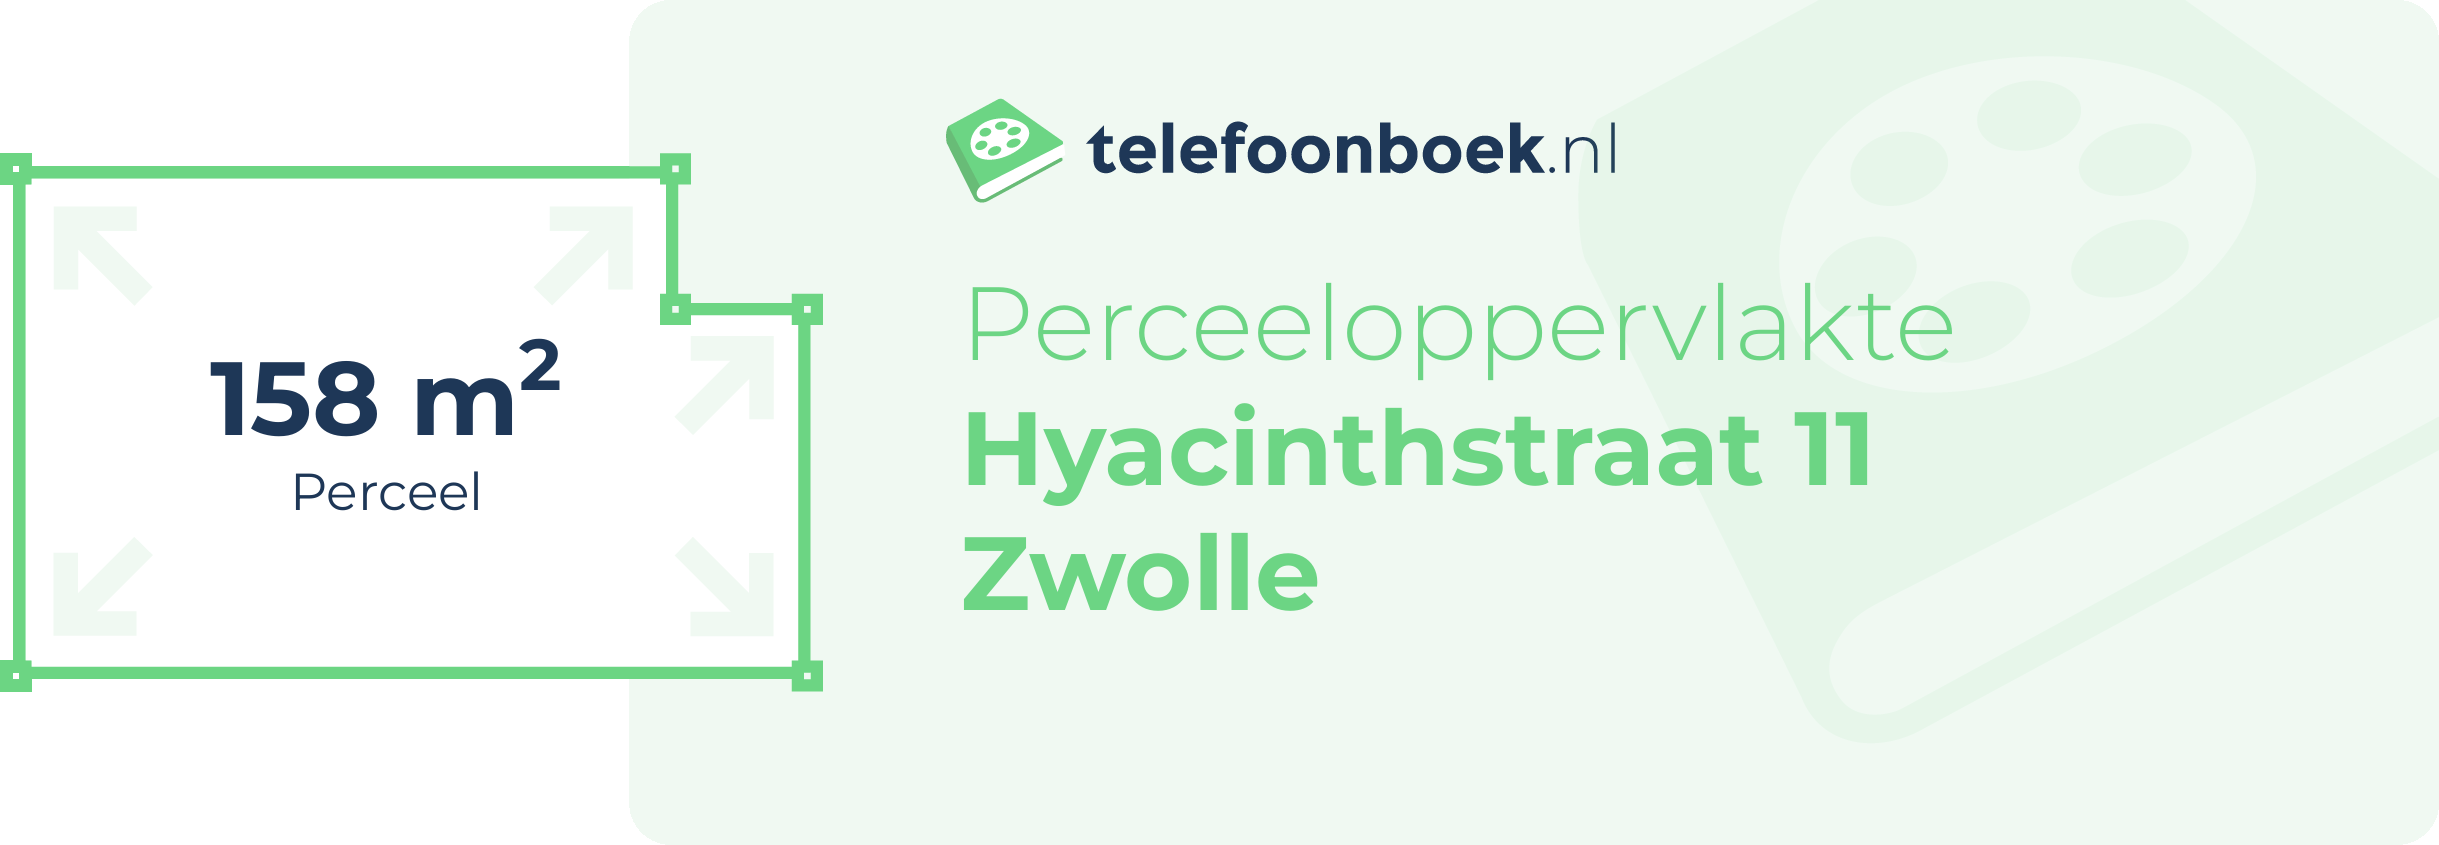 Perceeloppervlakte Hyacinthstraat 11 Zwolle